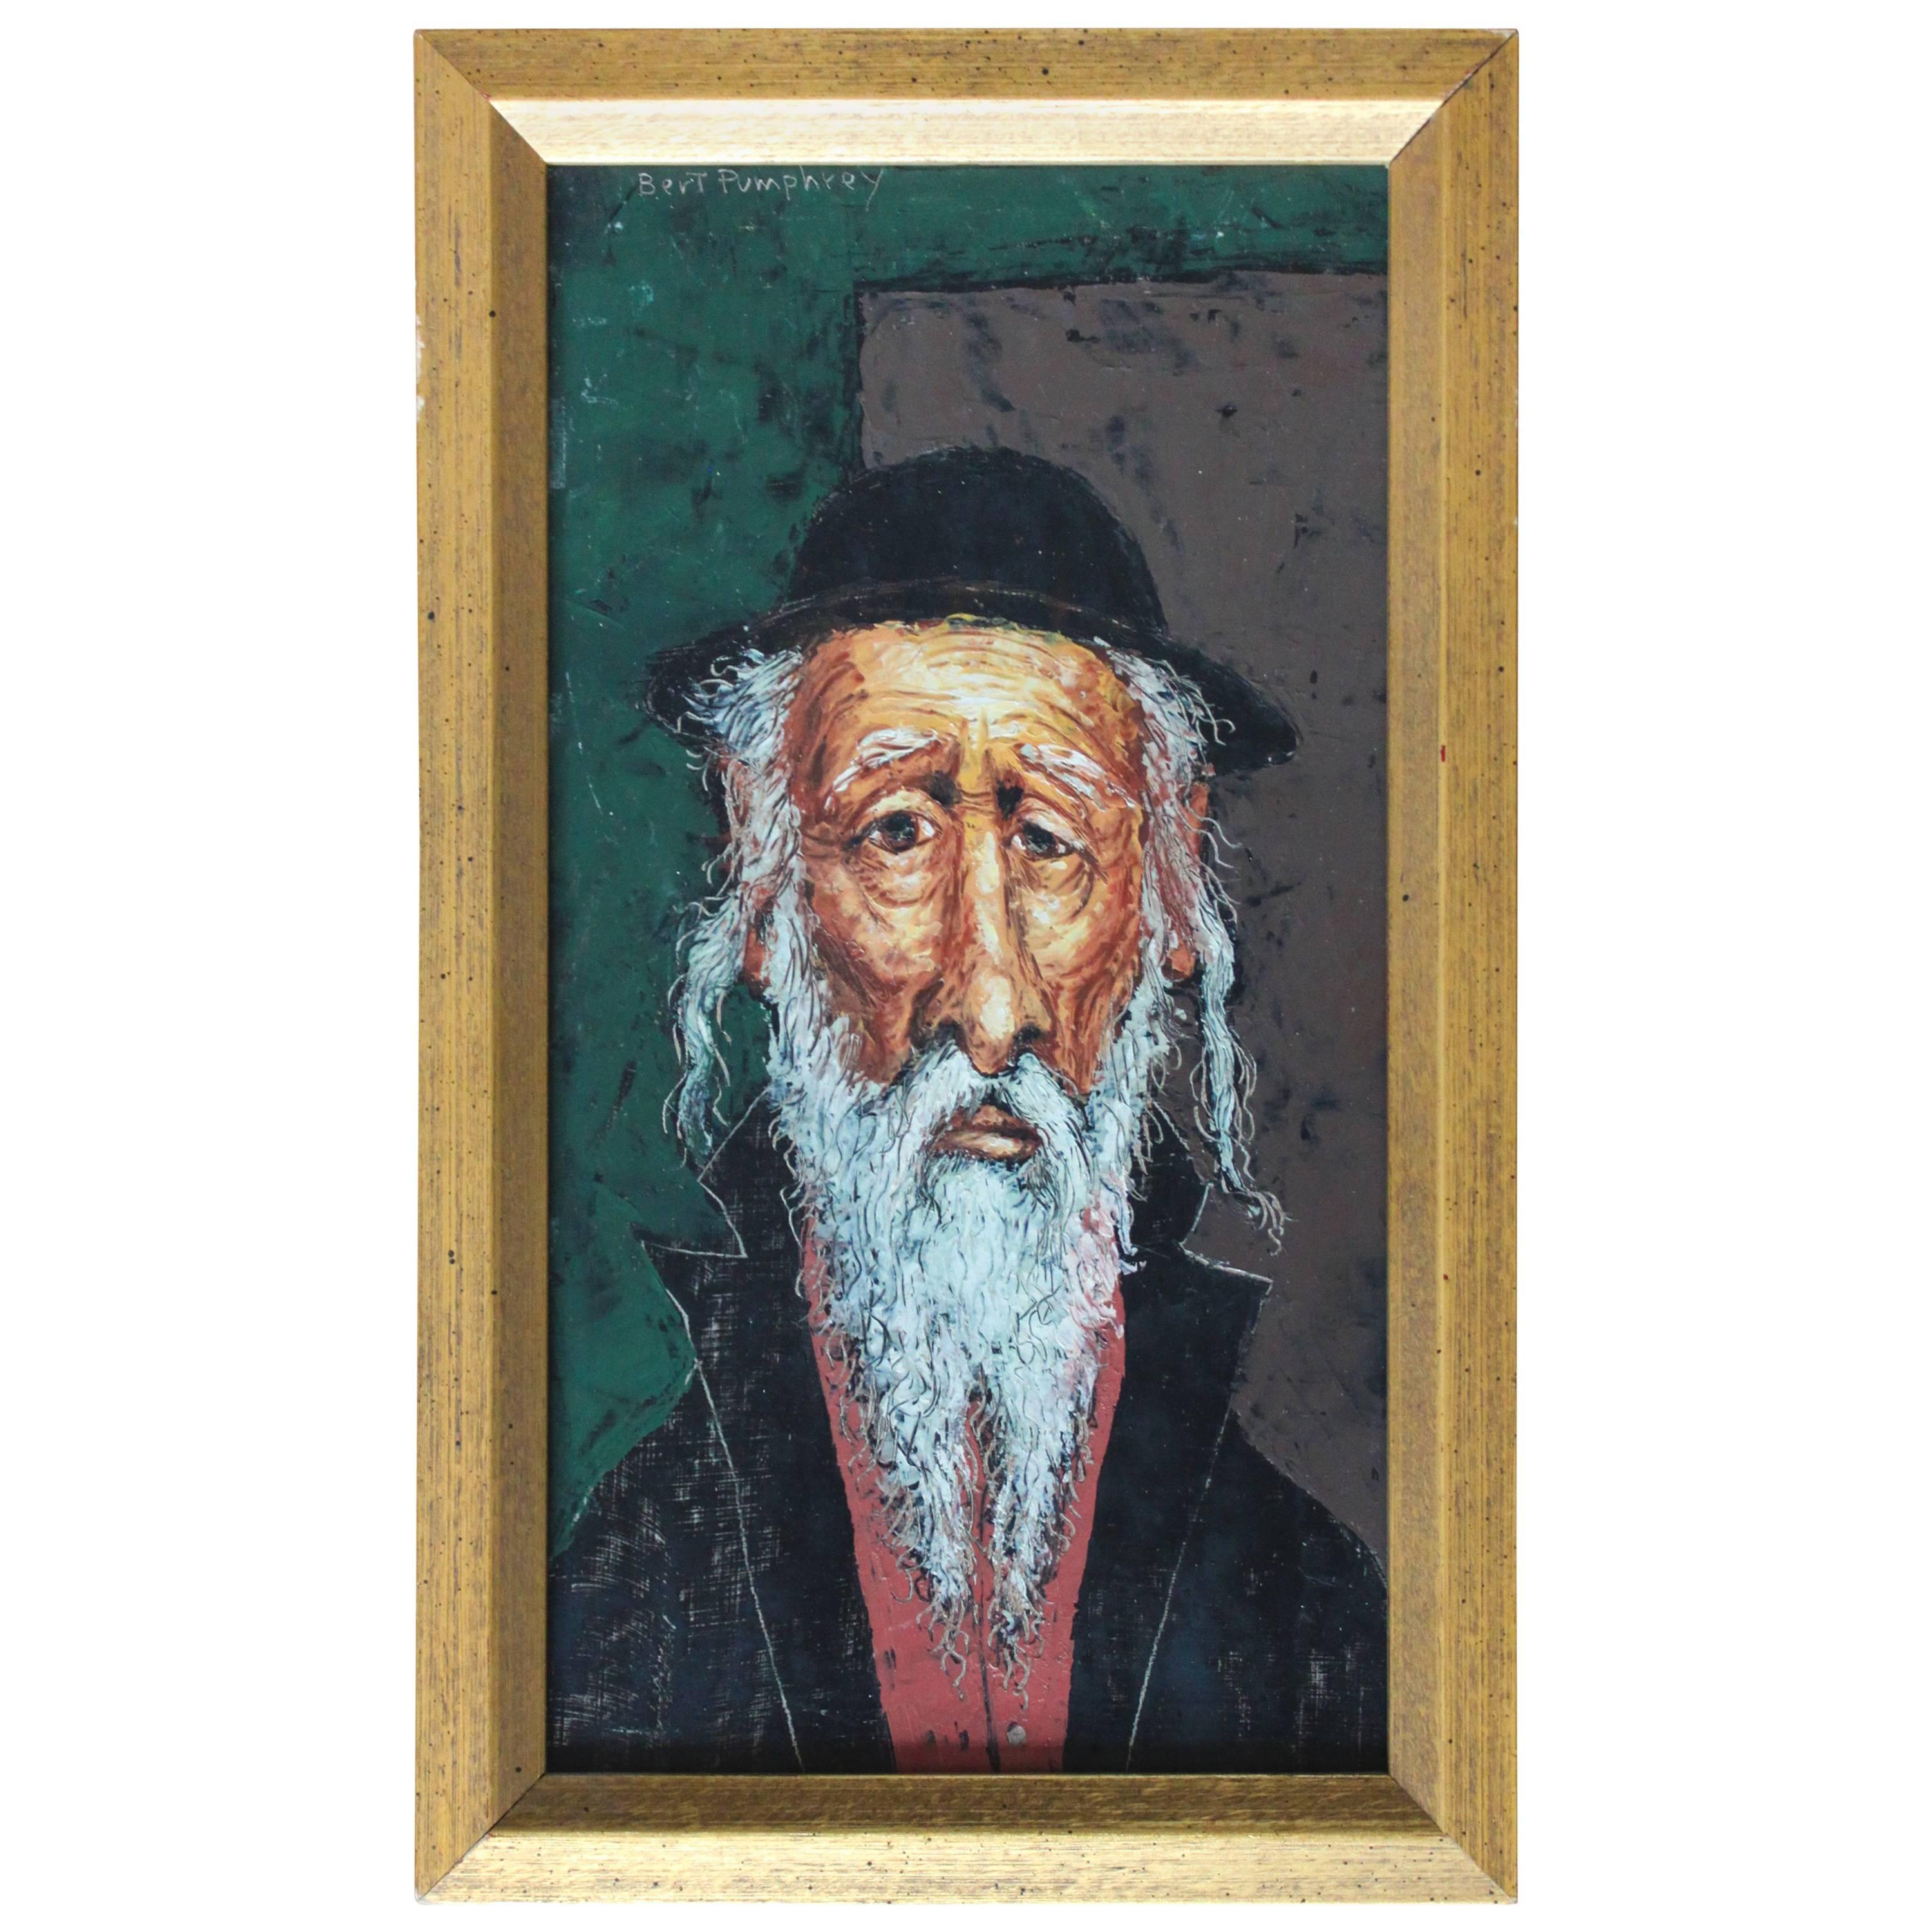 Bert Pumphrey "Hasidic" Painting For Sale